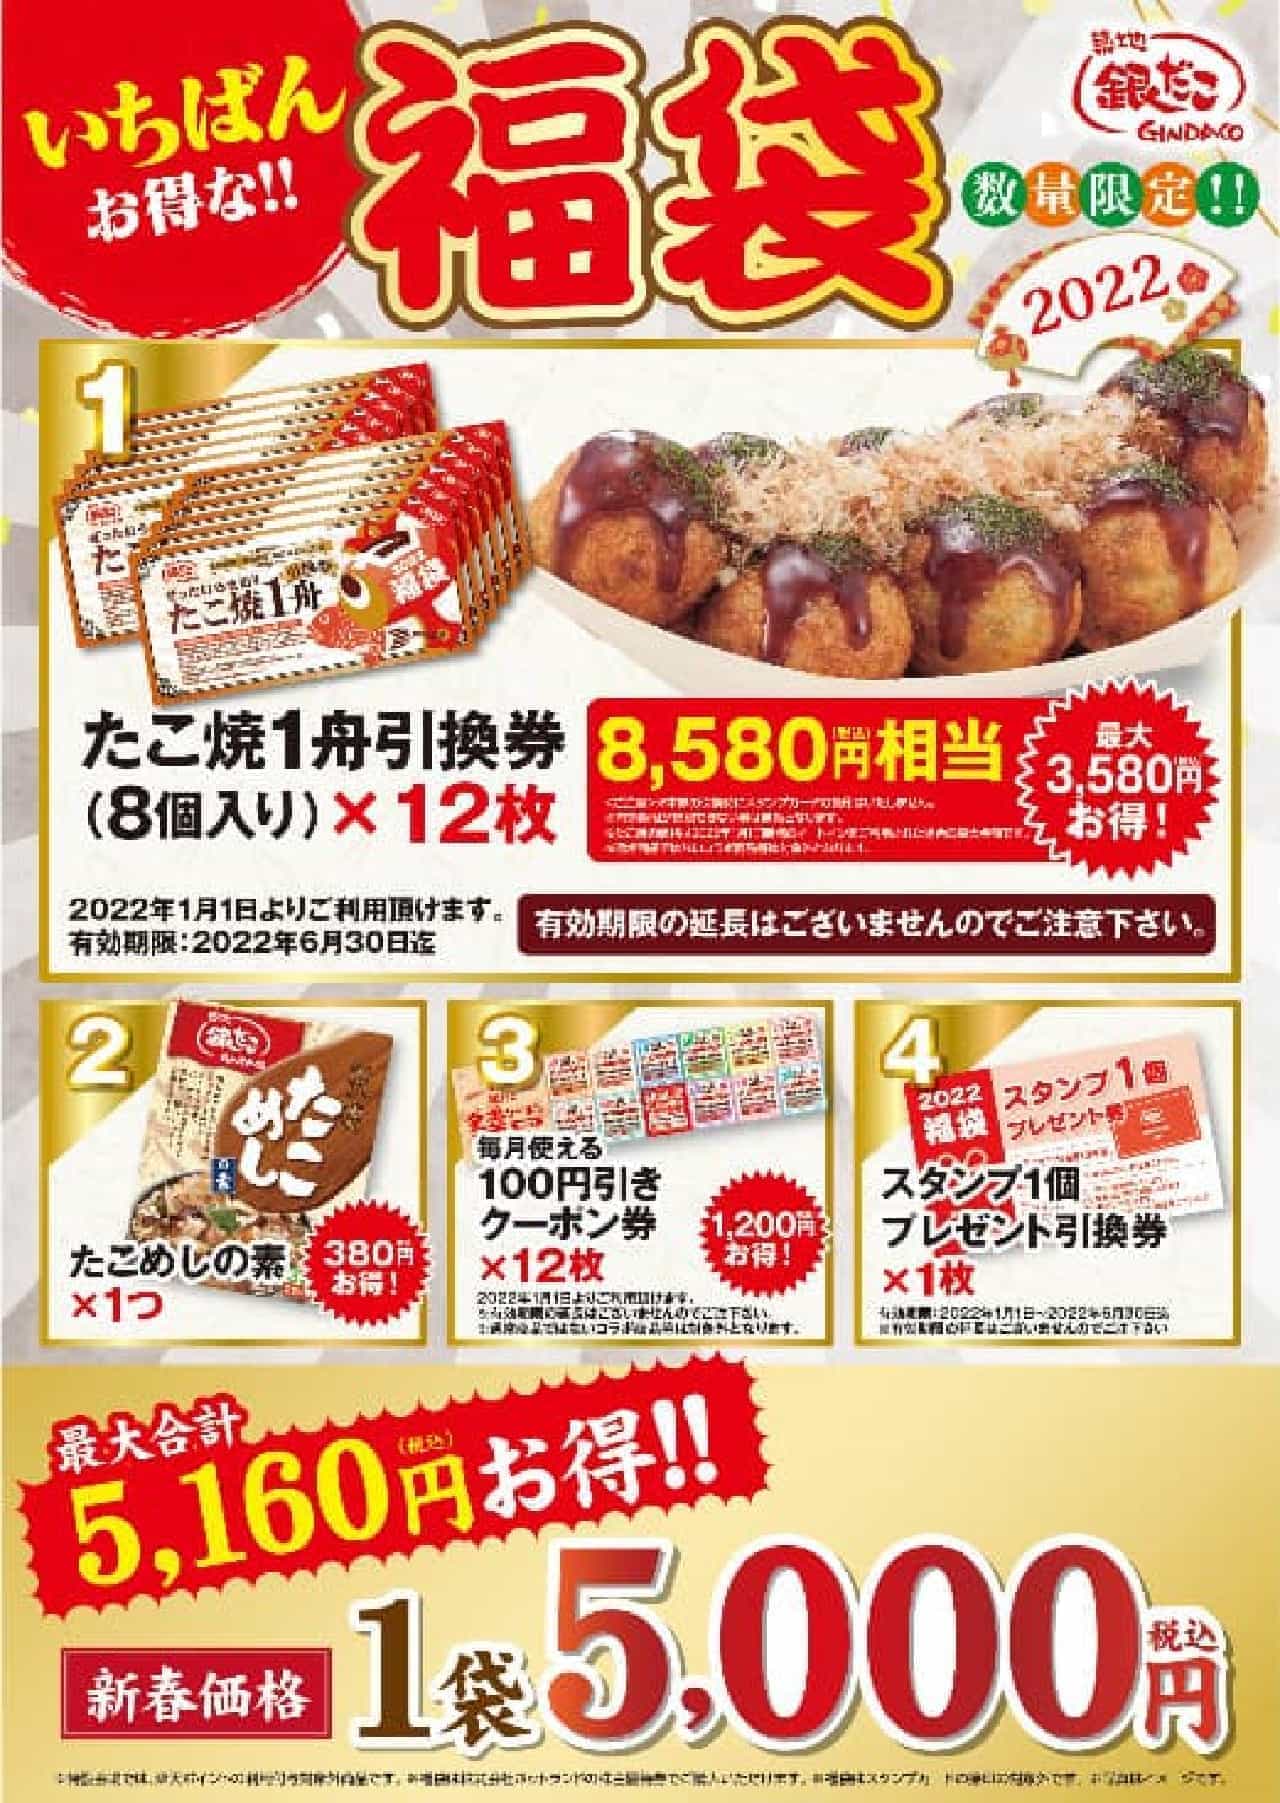 Tsukiji Gindaco "The best deals !! Lucky bag"